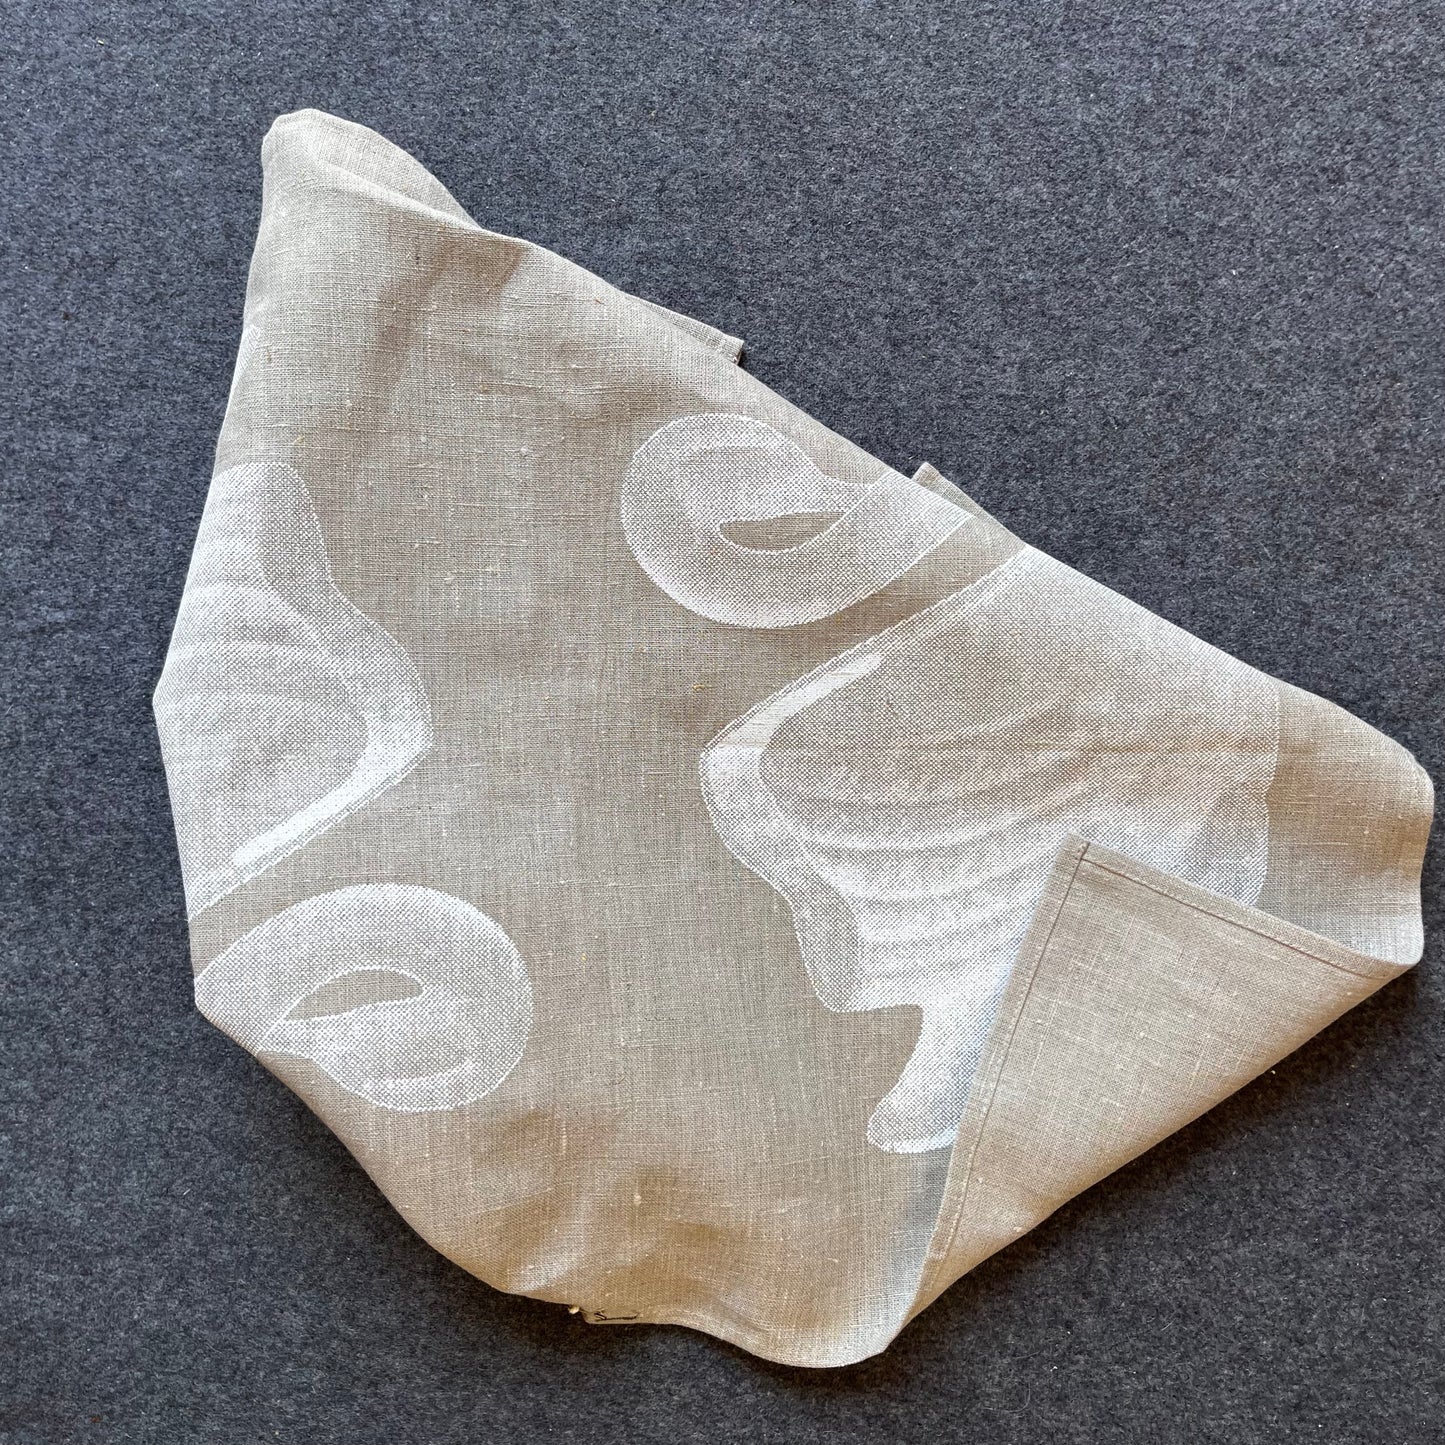 Crown & Feathers Linen Tea Towel - Swan